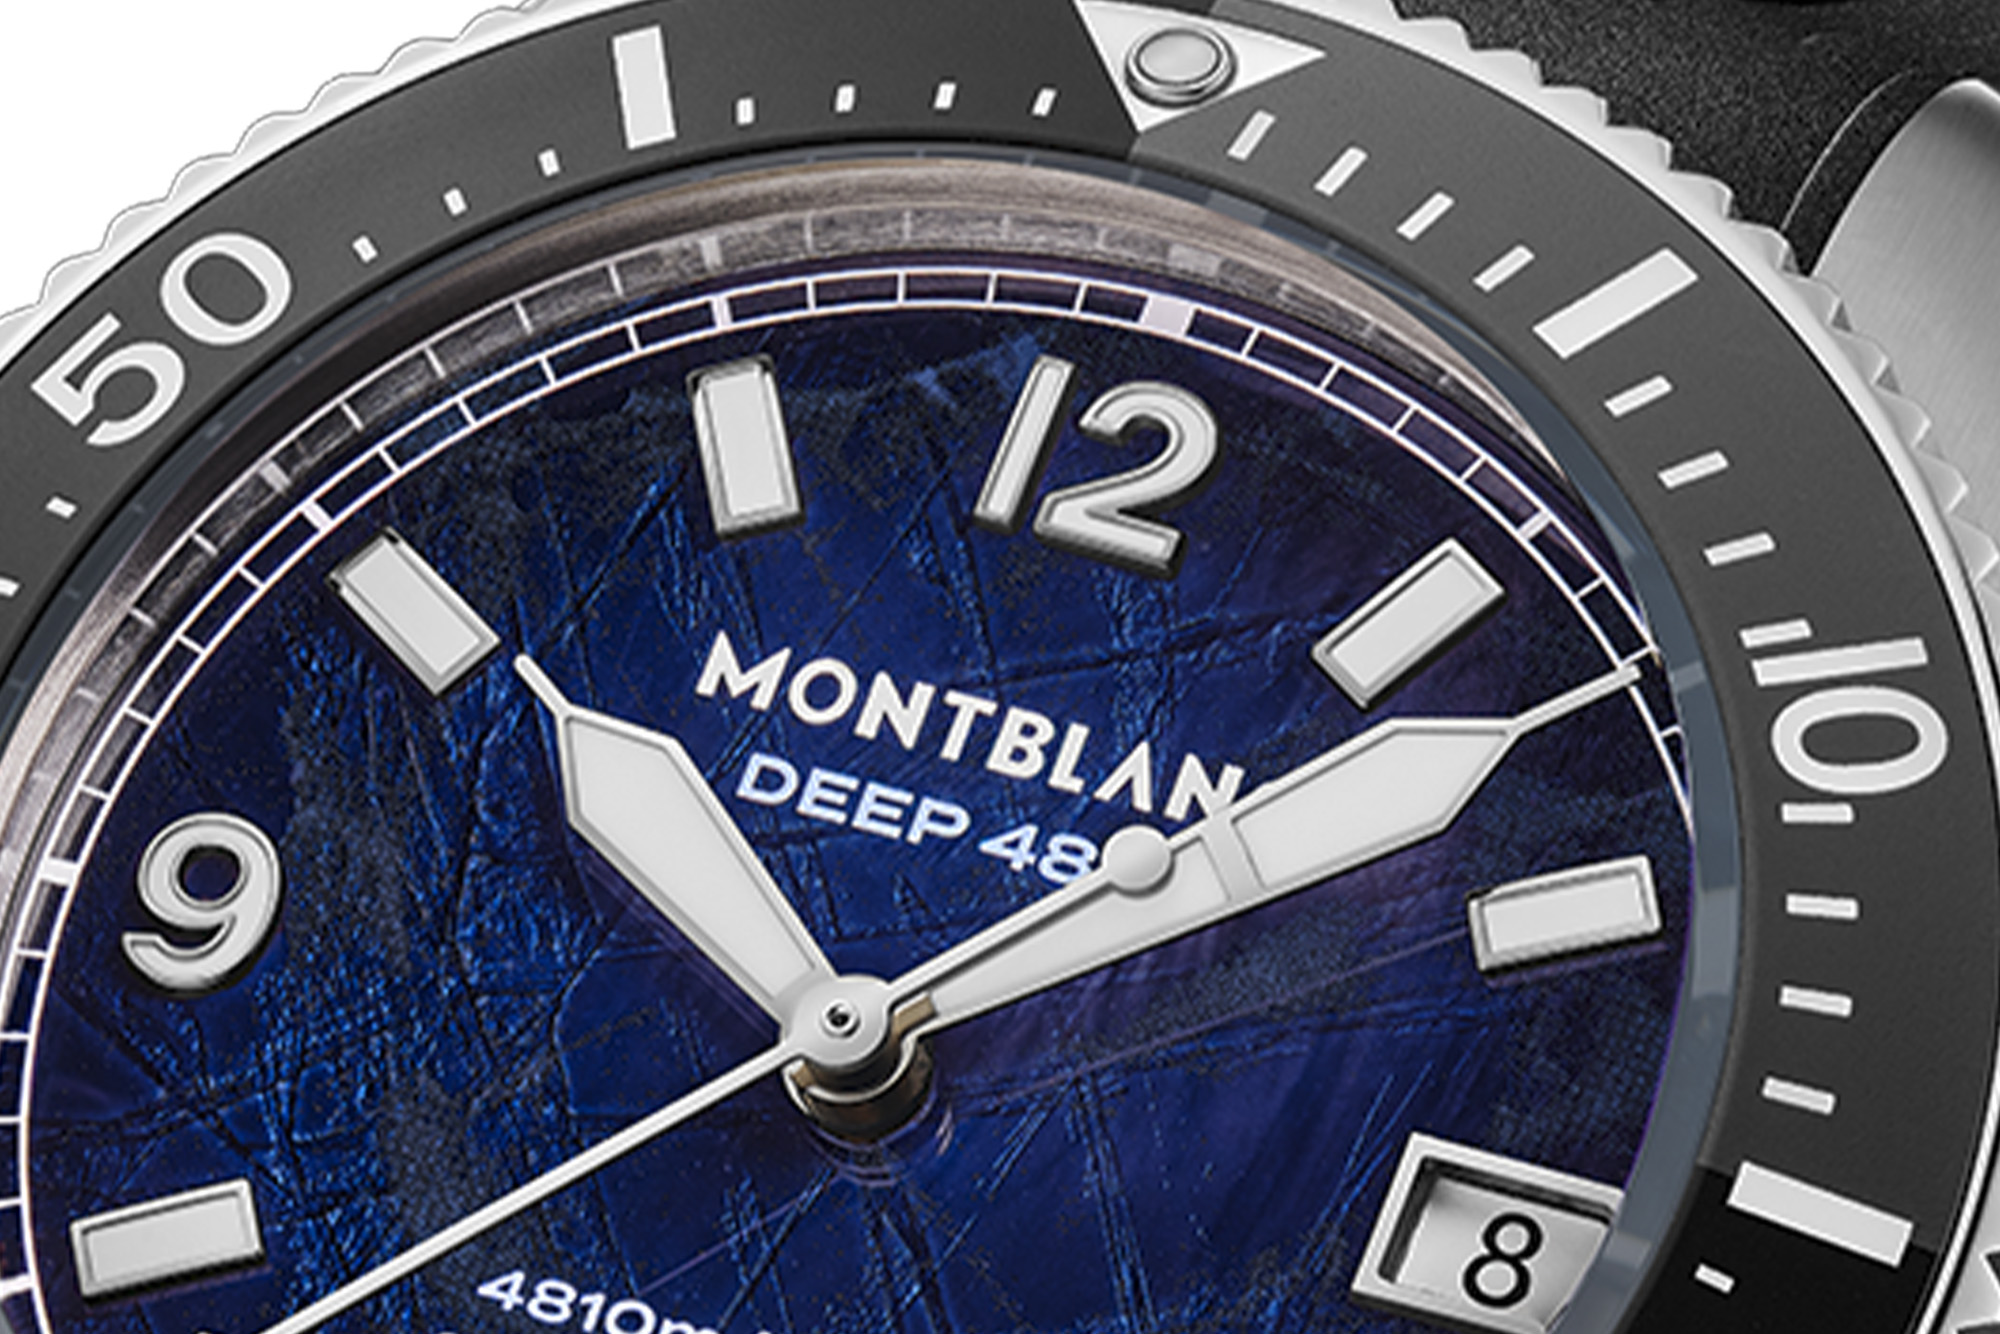 Montblanc Iced Sea 0 Oxygen Deep 4810